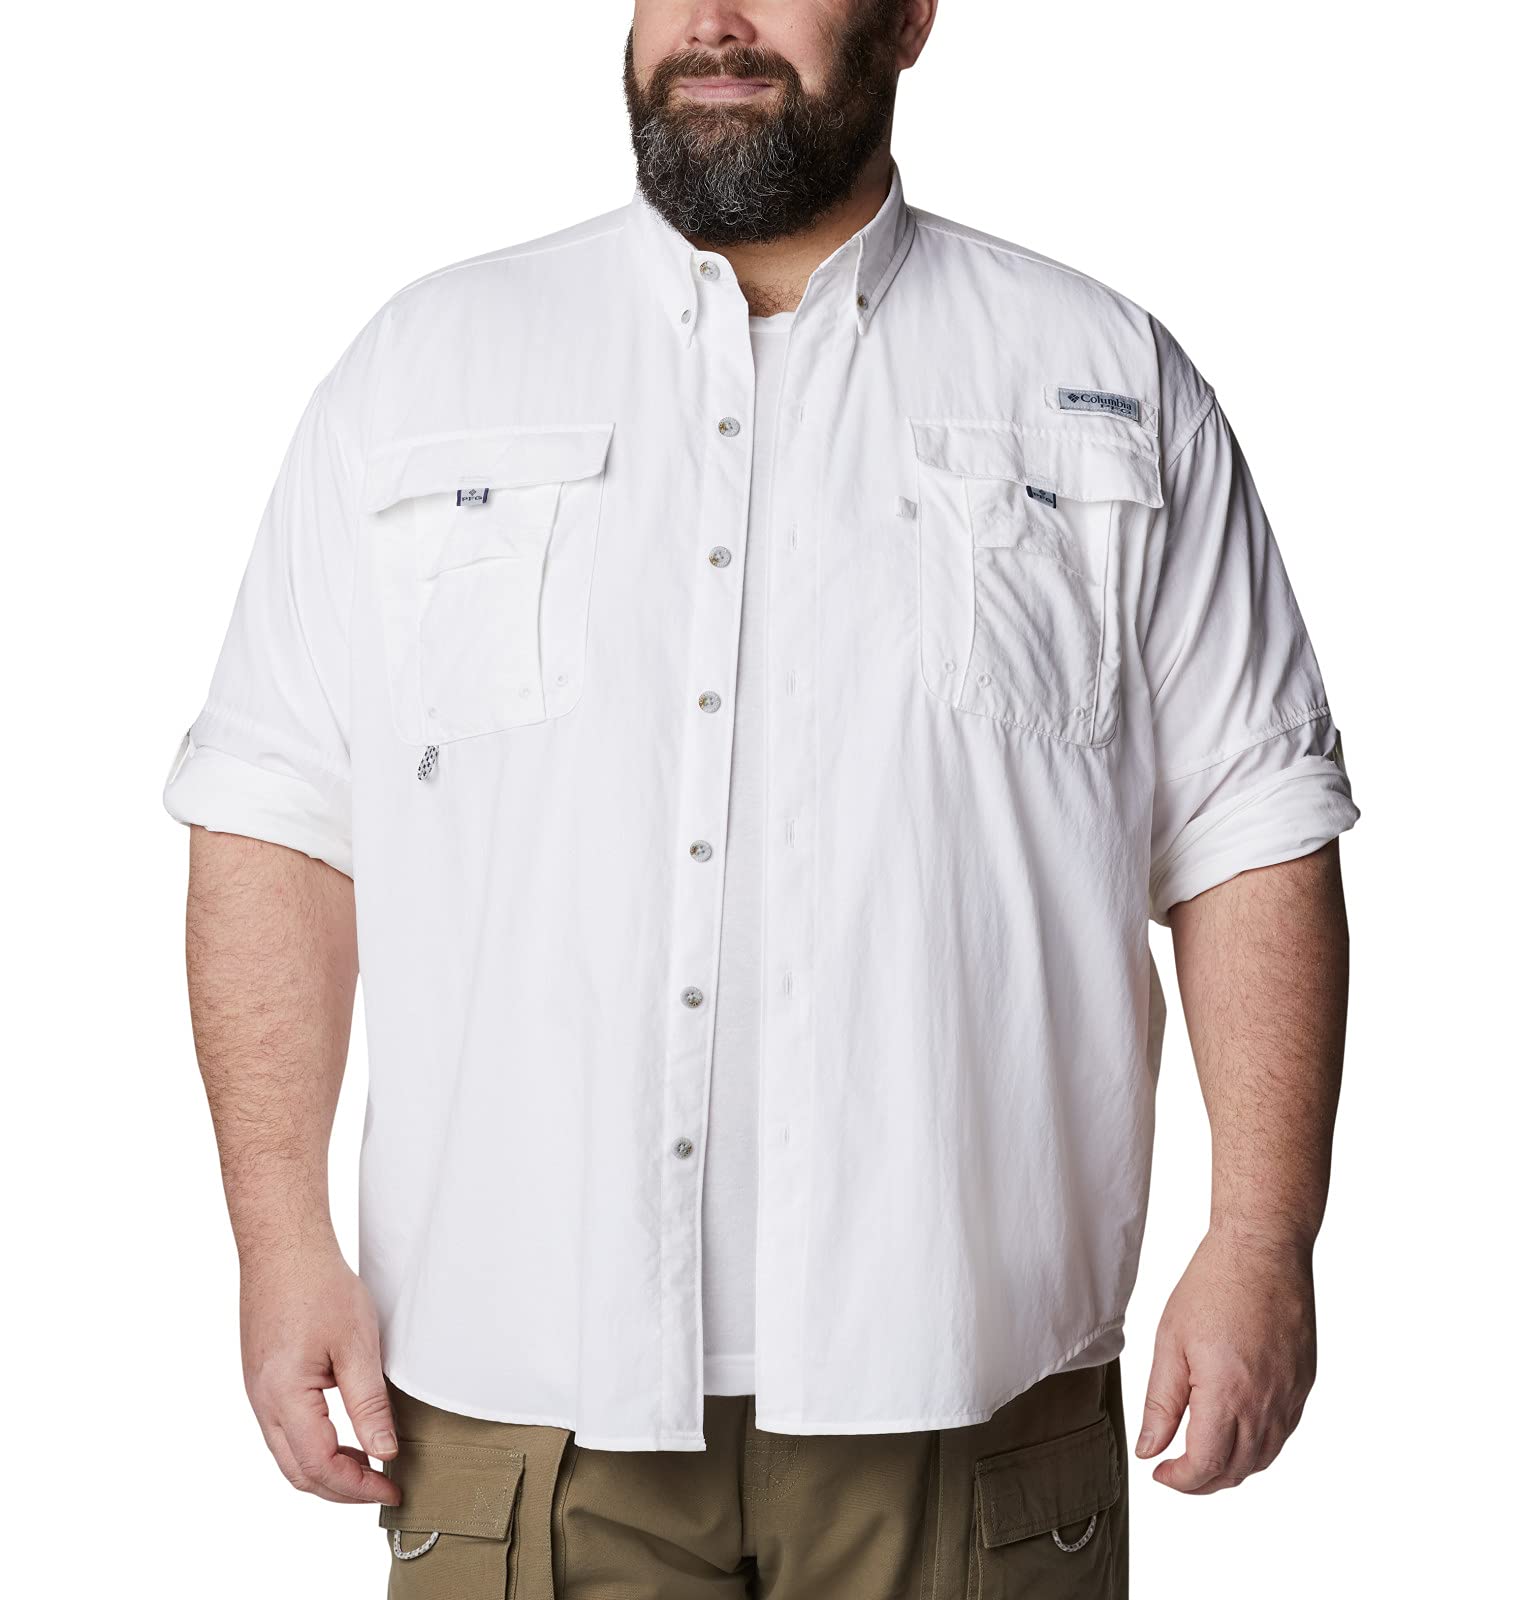 Columbia Men's Bahama II Long Sleeve Shirt,White,Small